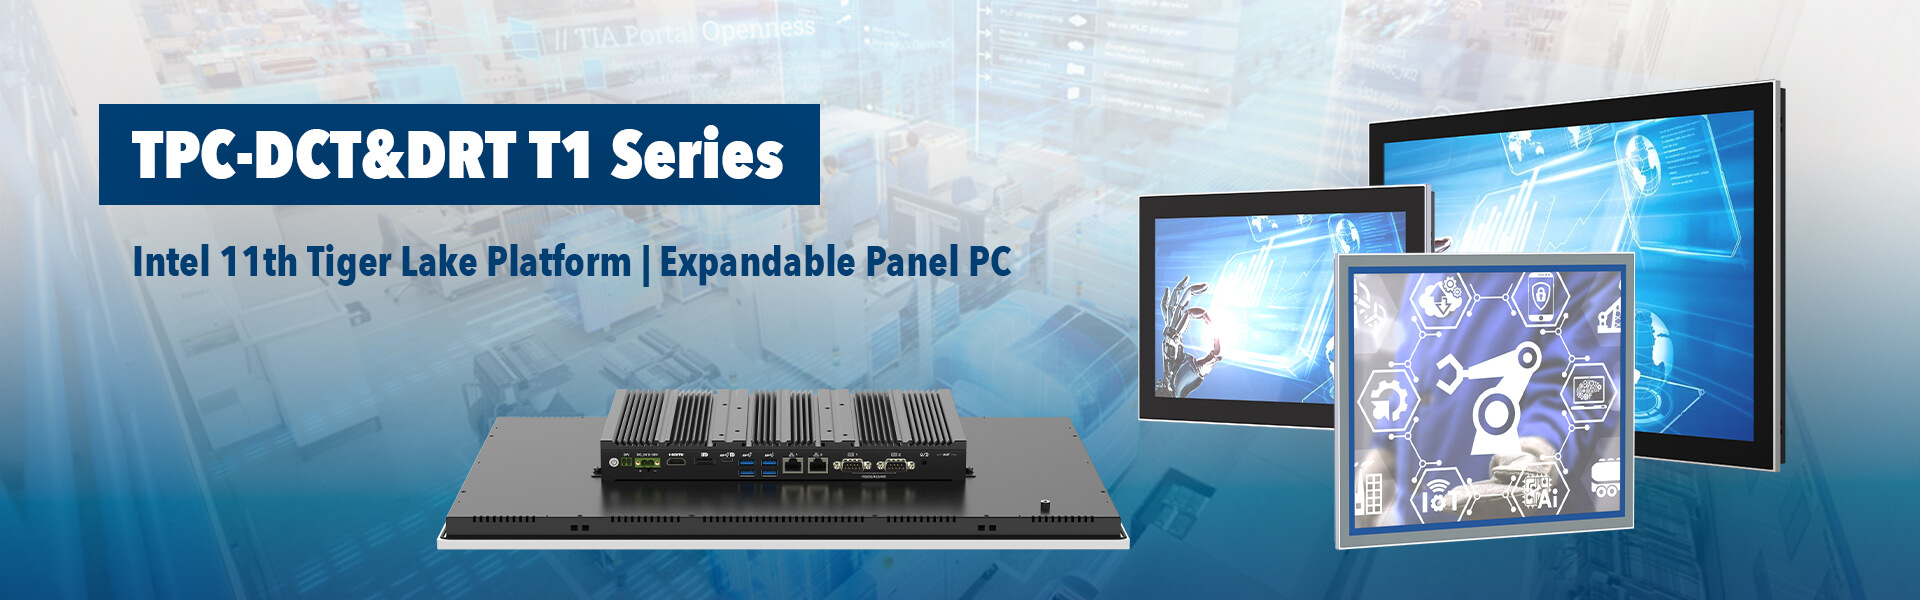 Expandable Touch Panel PC 6